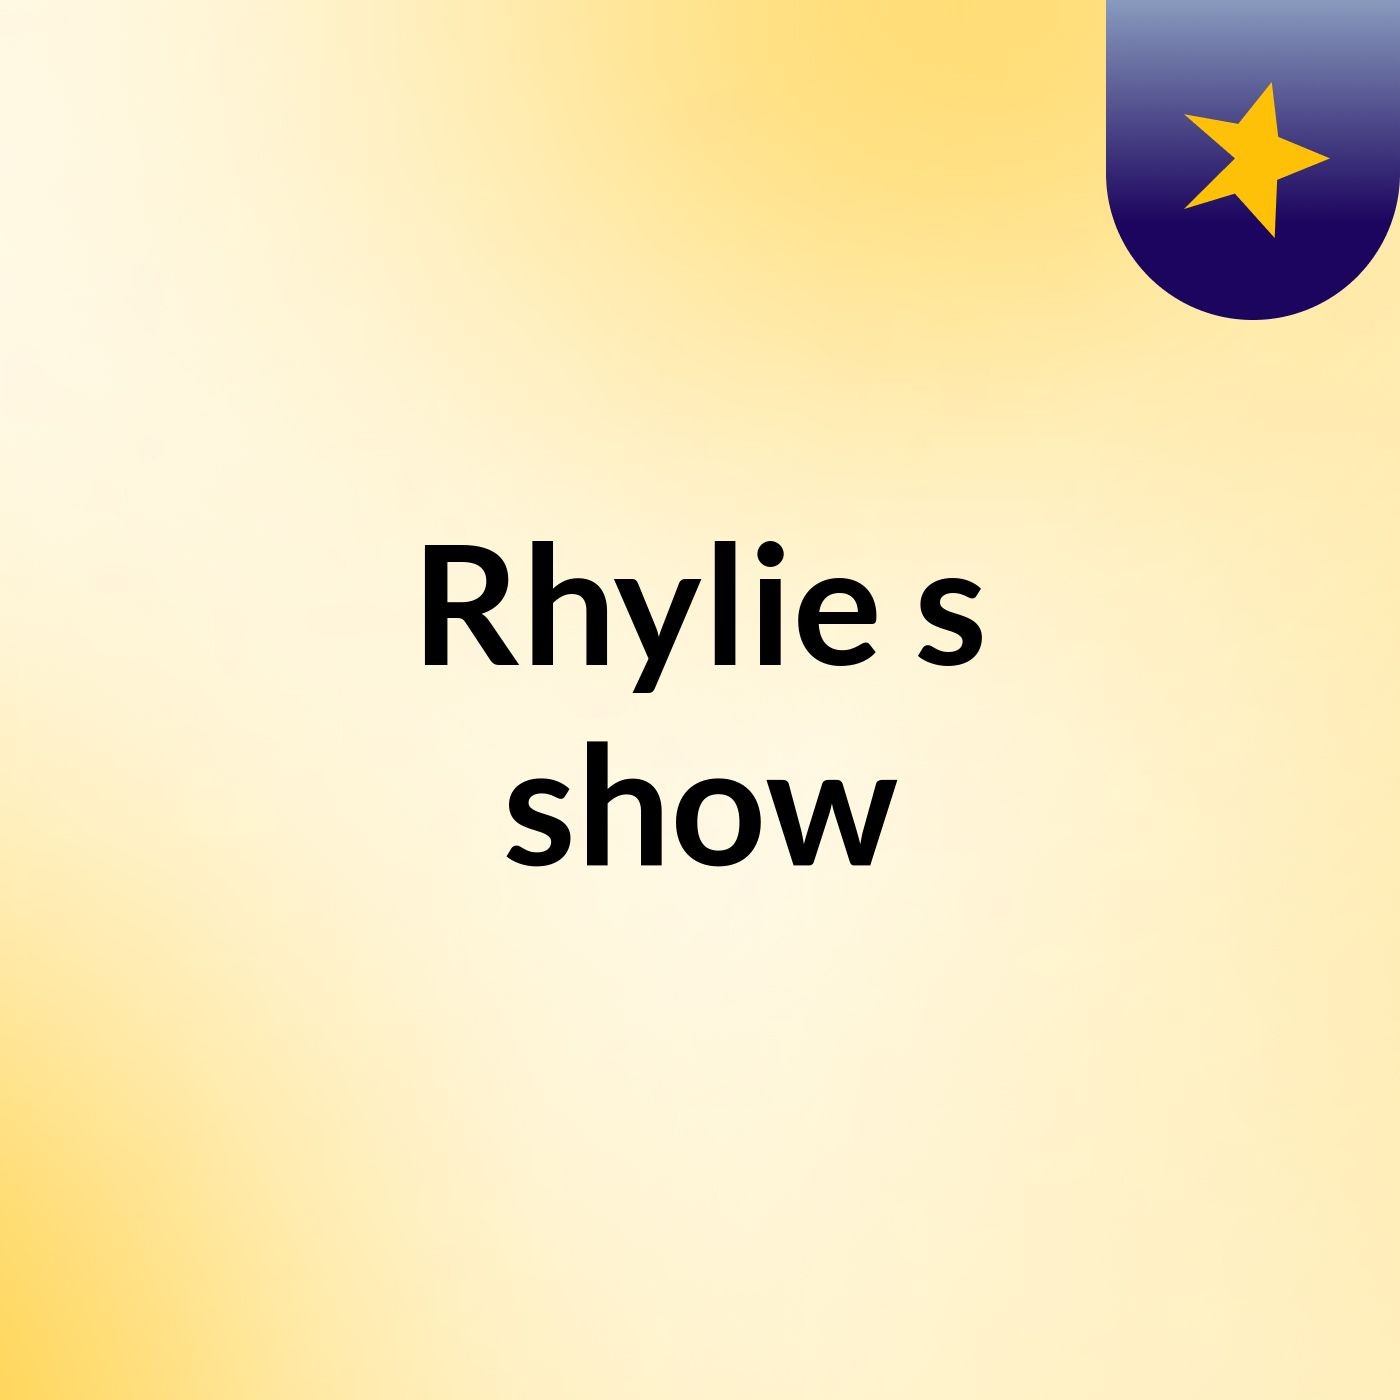 Rhylie's show